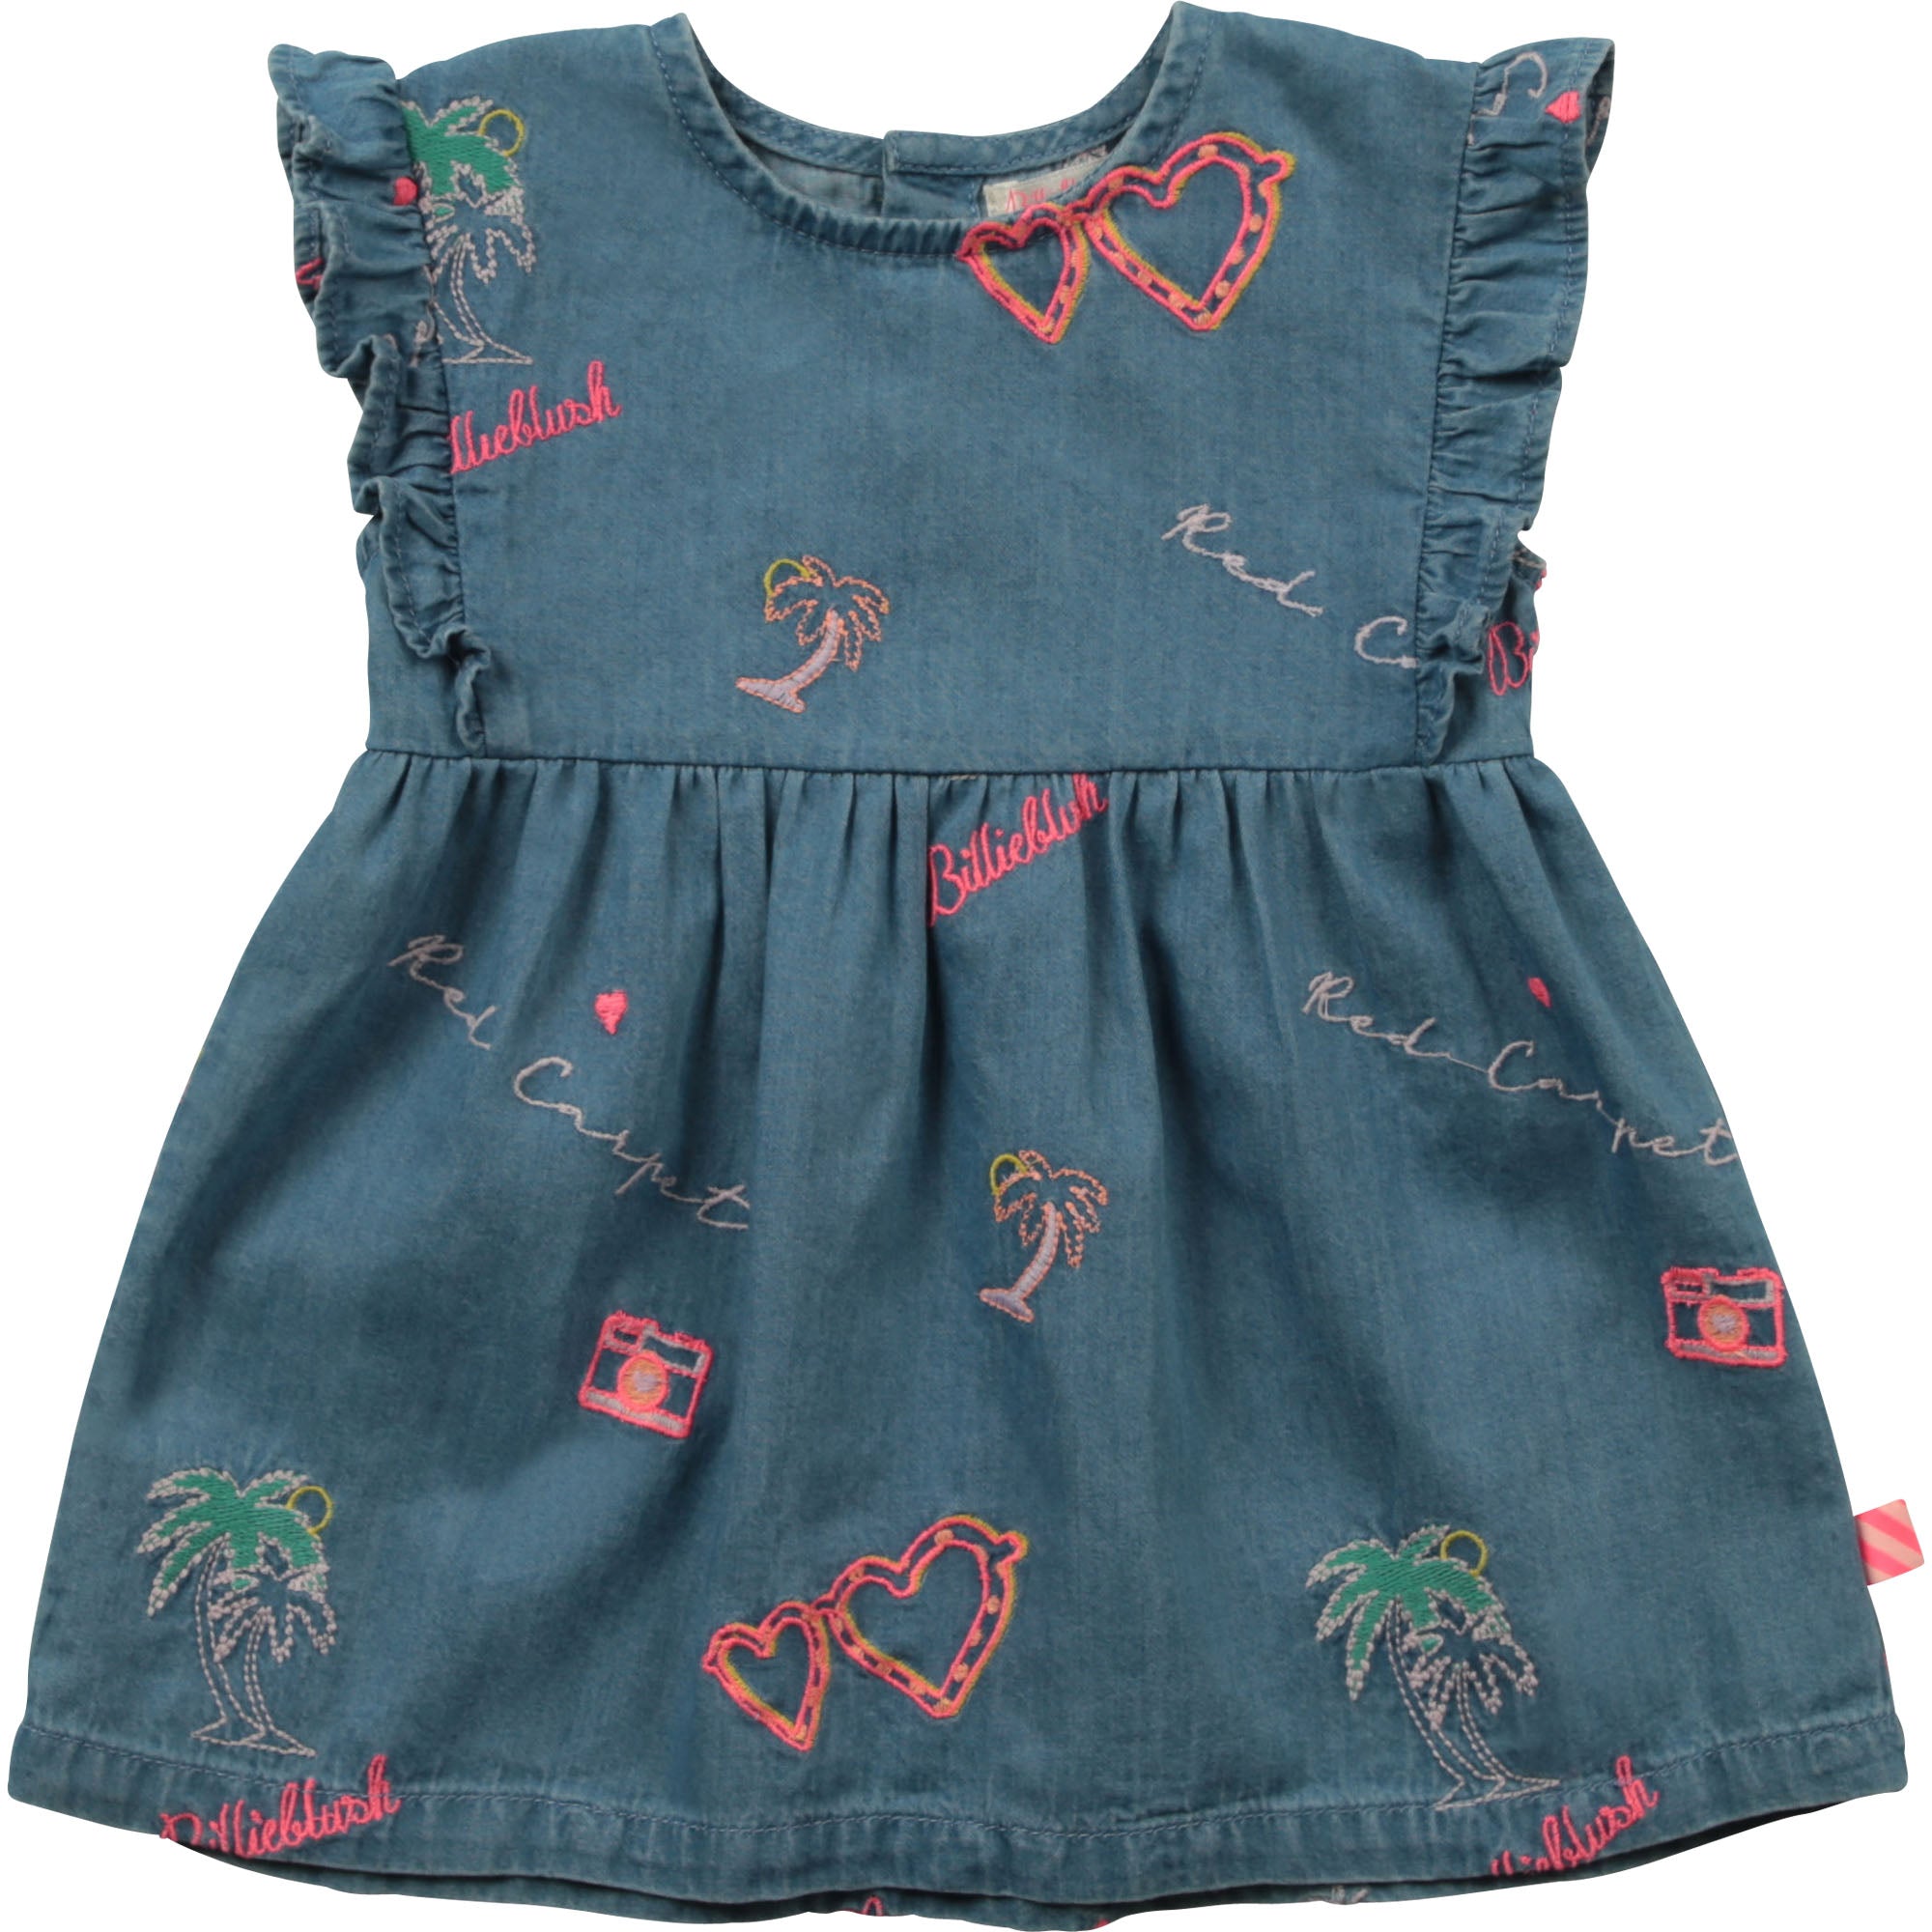 Baby Girls Blue Embroidered Denim Dress